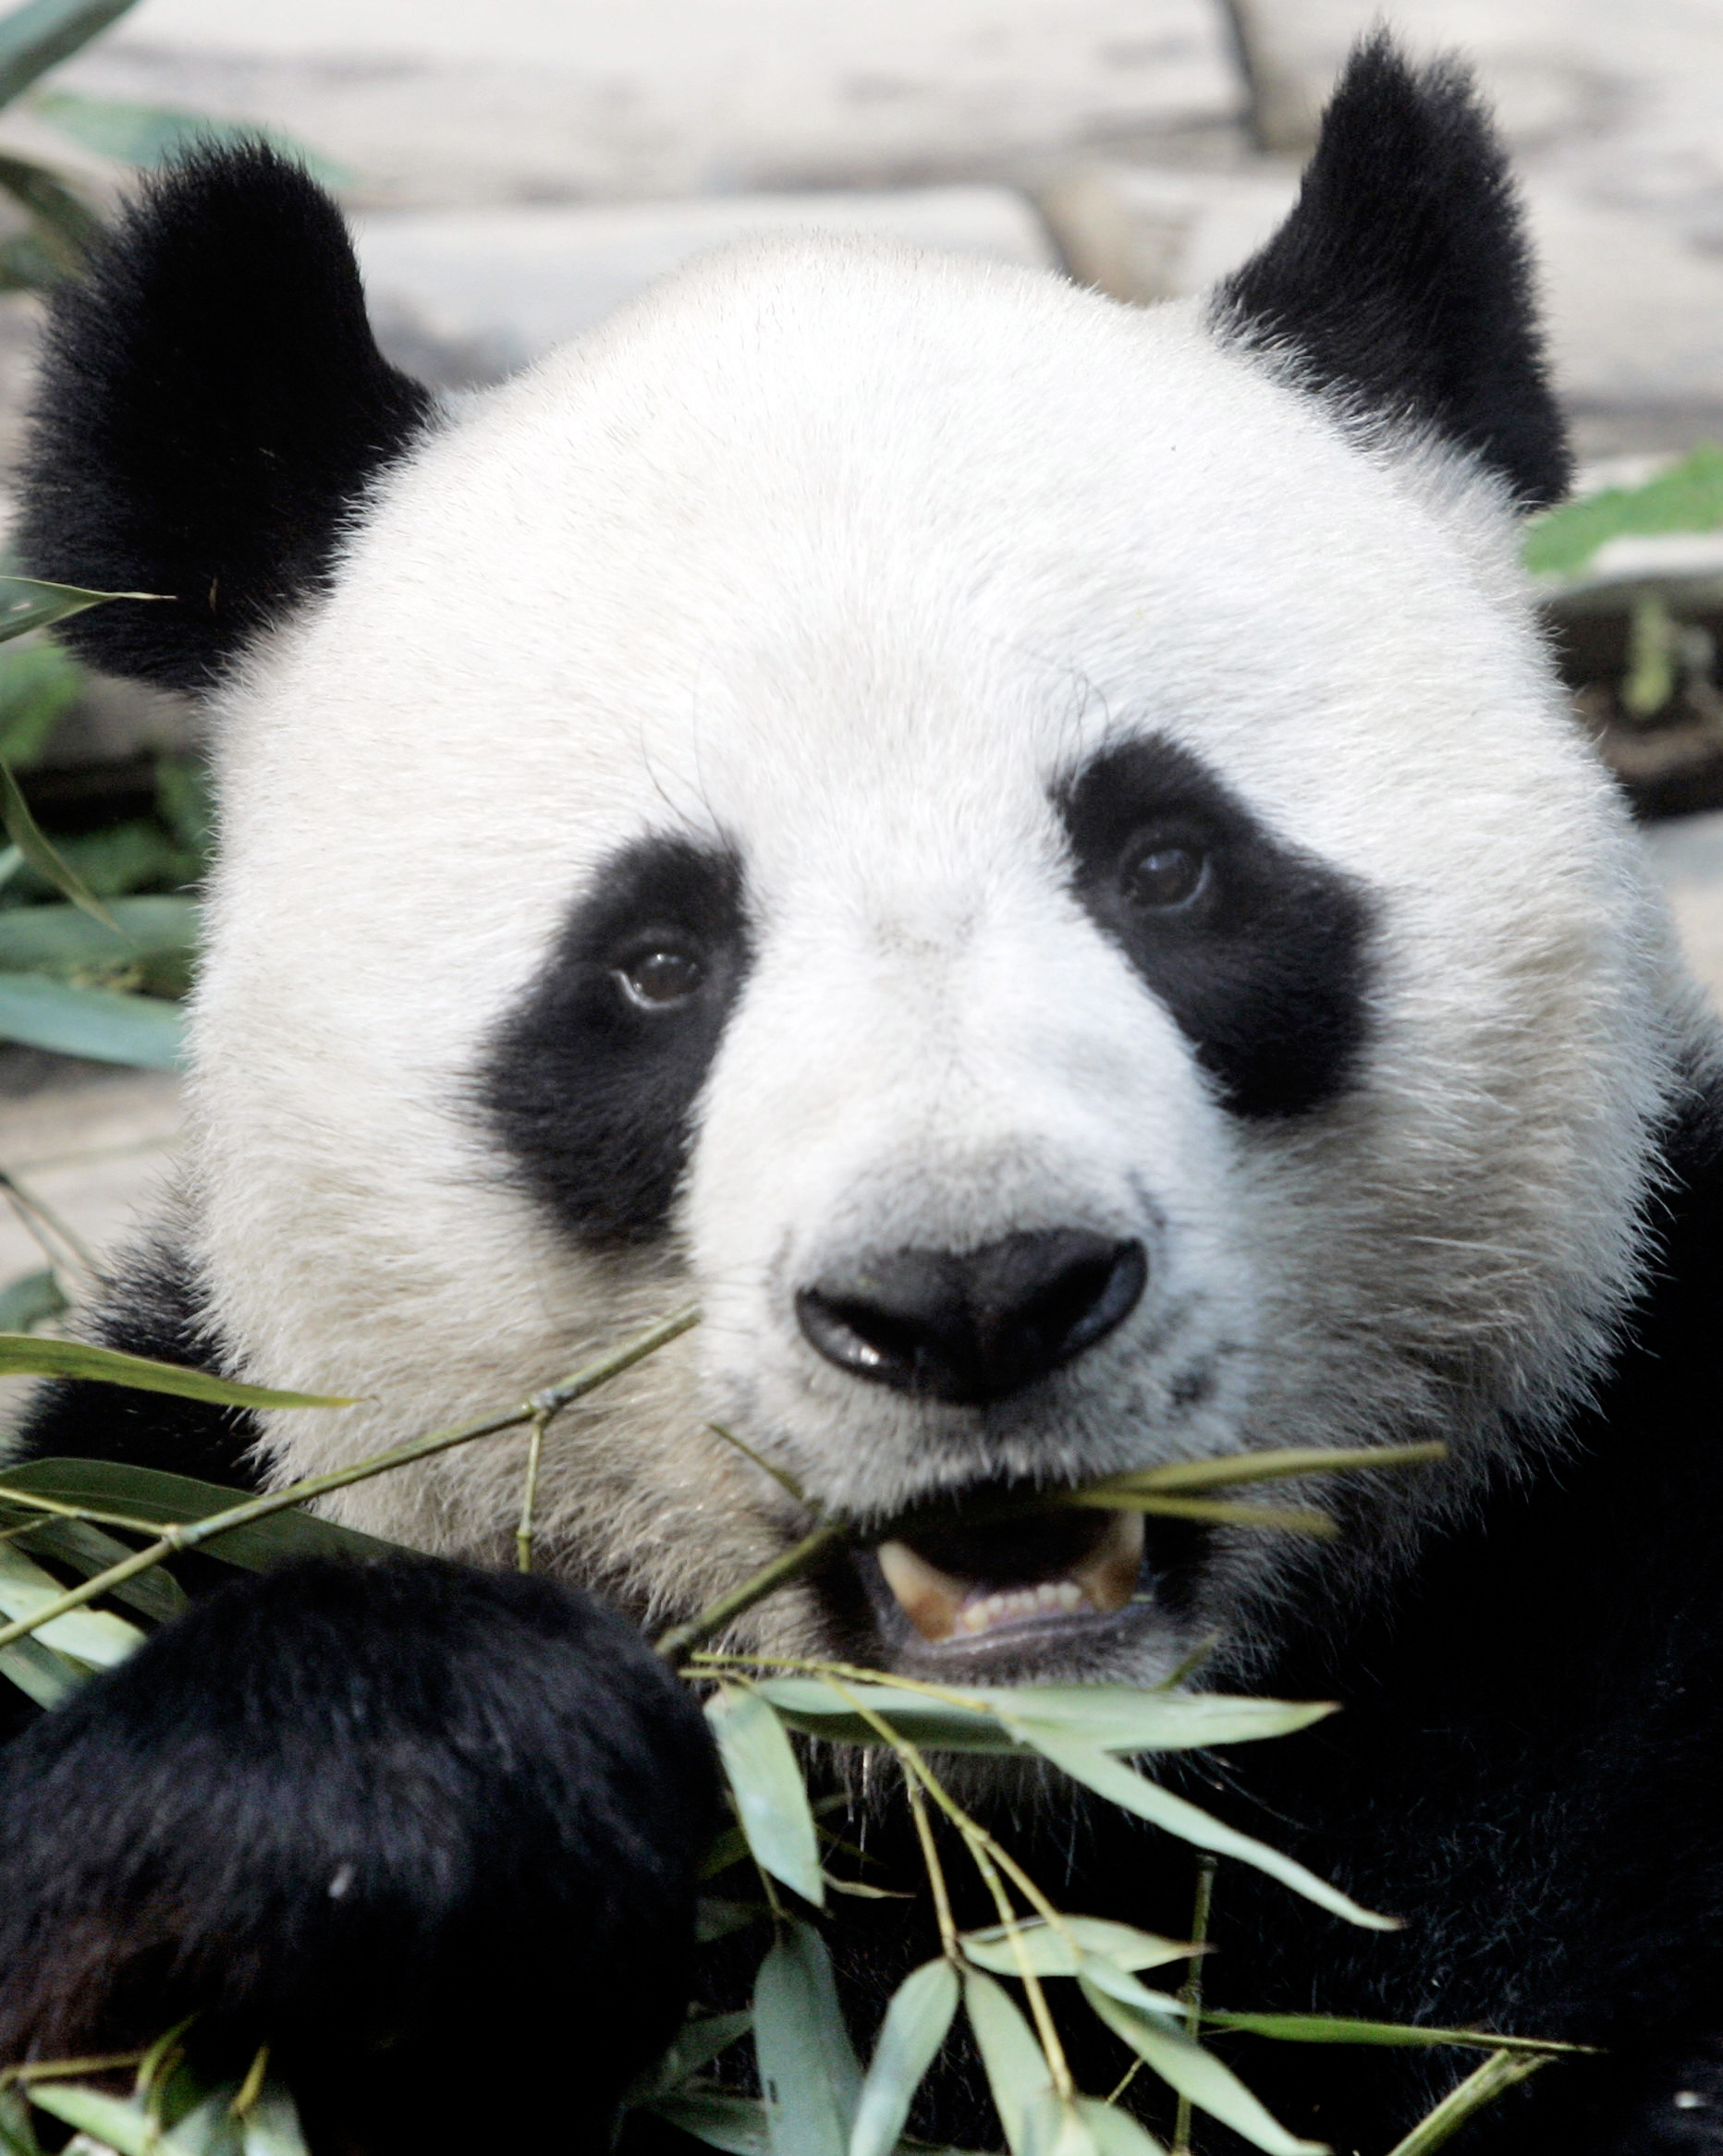 Popular panda on loan from China dies in Thai zoo